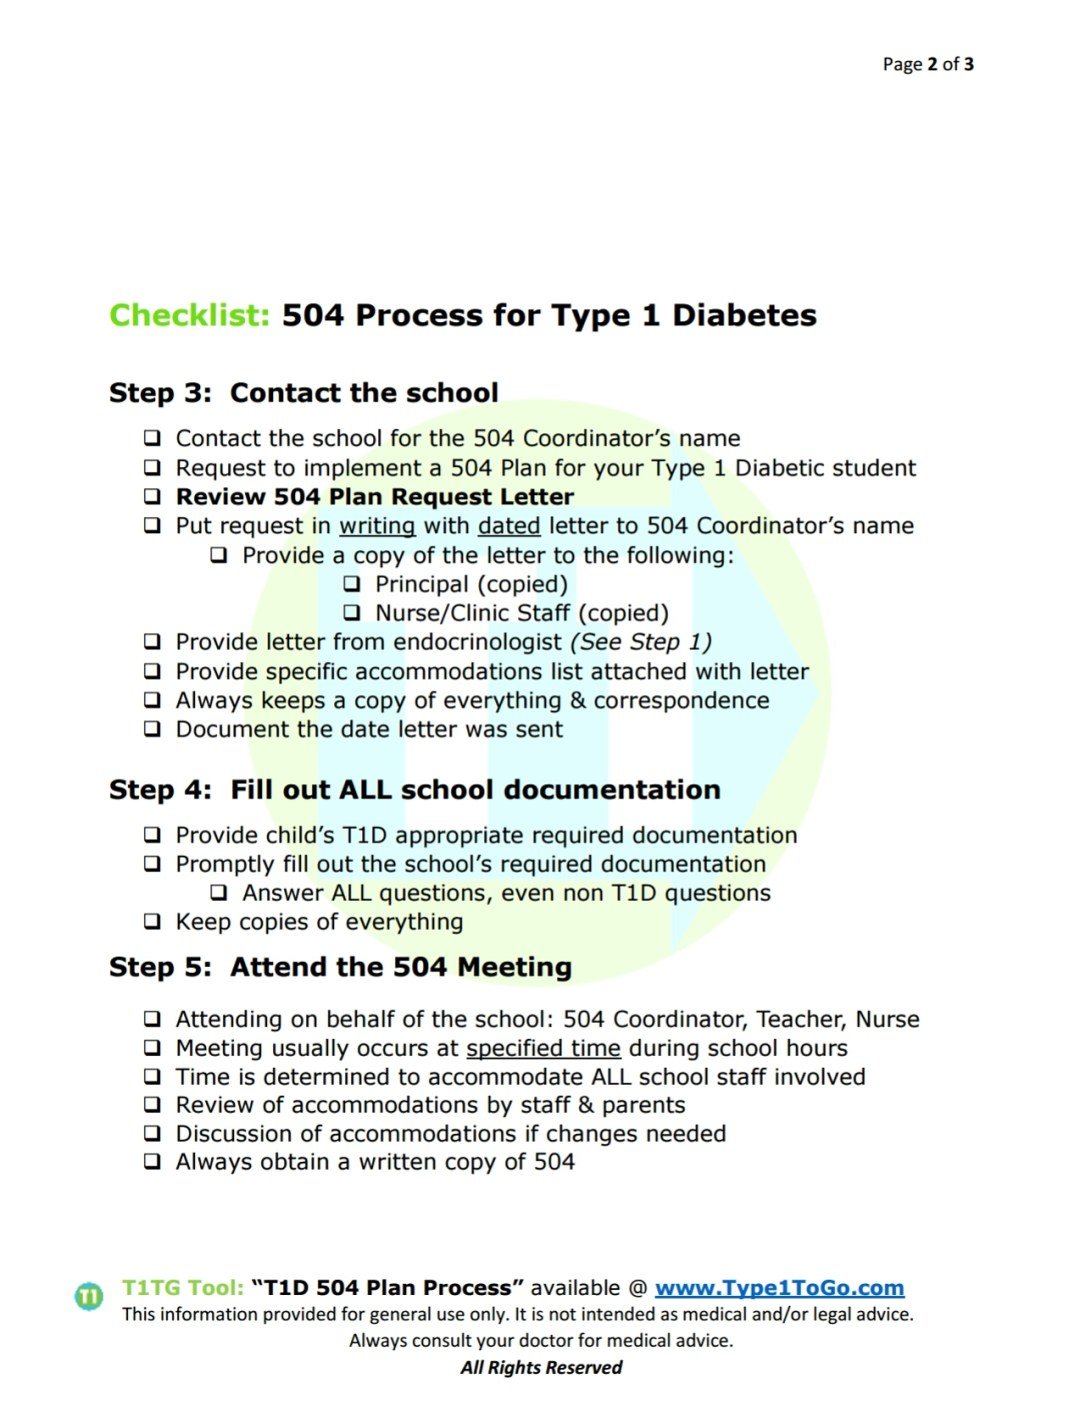 504 Plans for Type 1 Diabetics